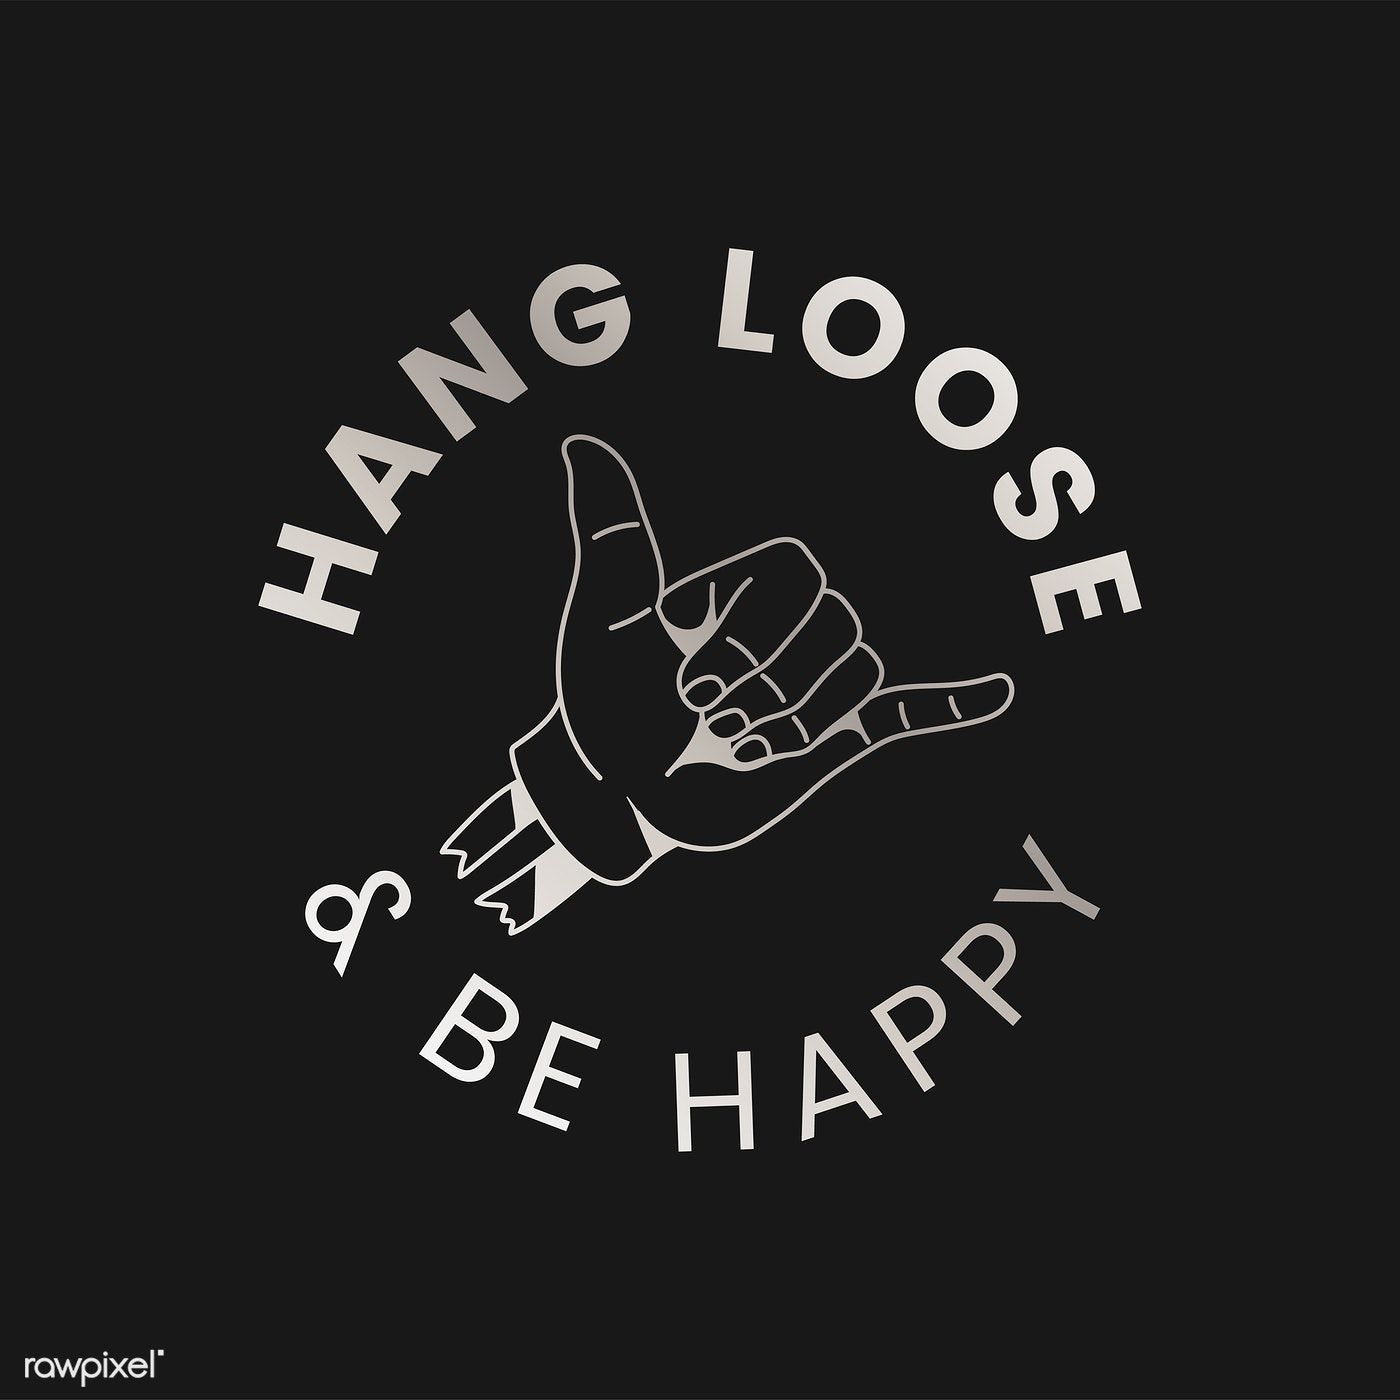 Hang loose and be happy logo vector. free image / Aum. Happy logo, Vector logo, Hang loose